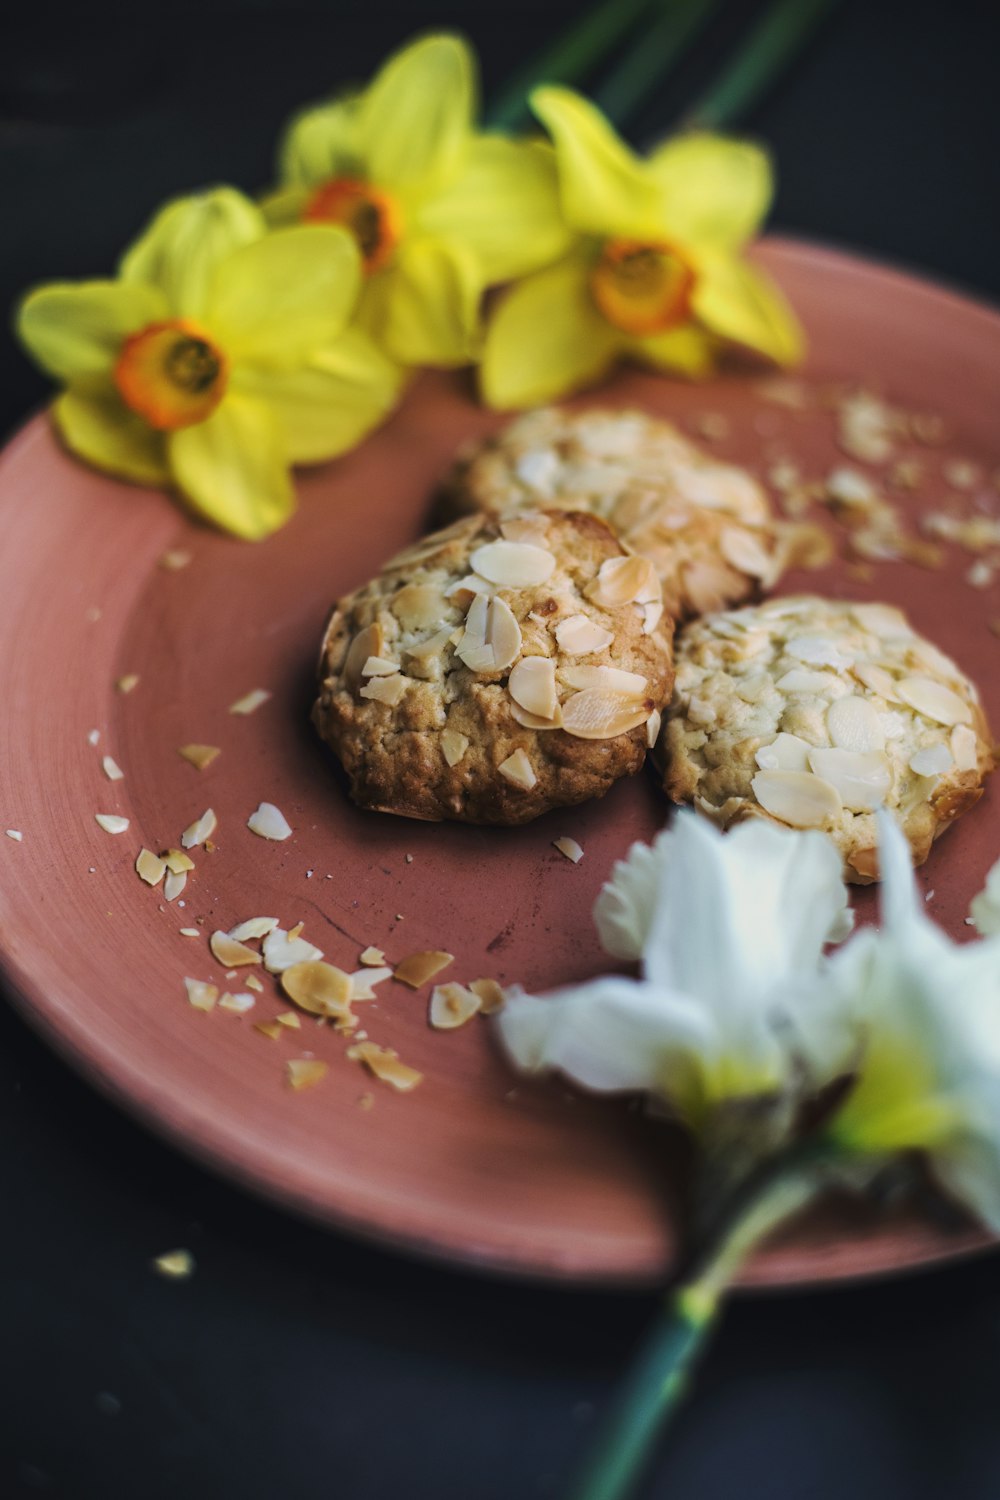 biscoitos de aveia e flores de narciso no prato